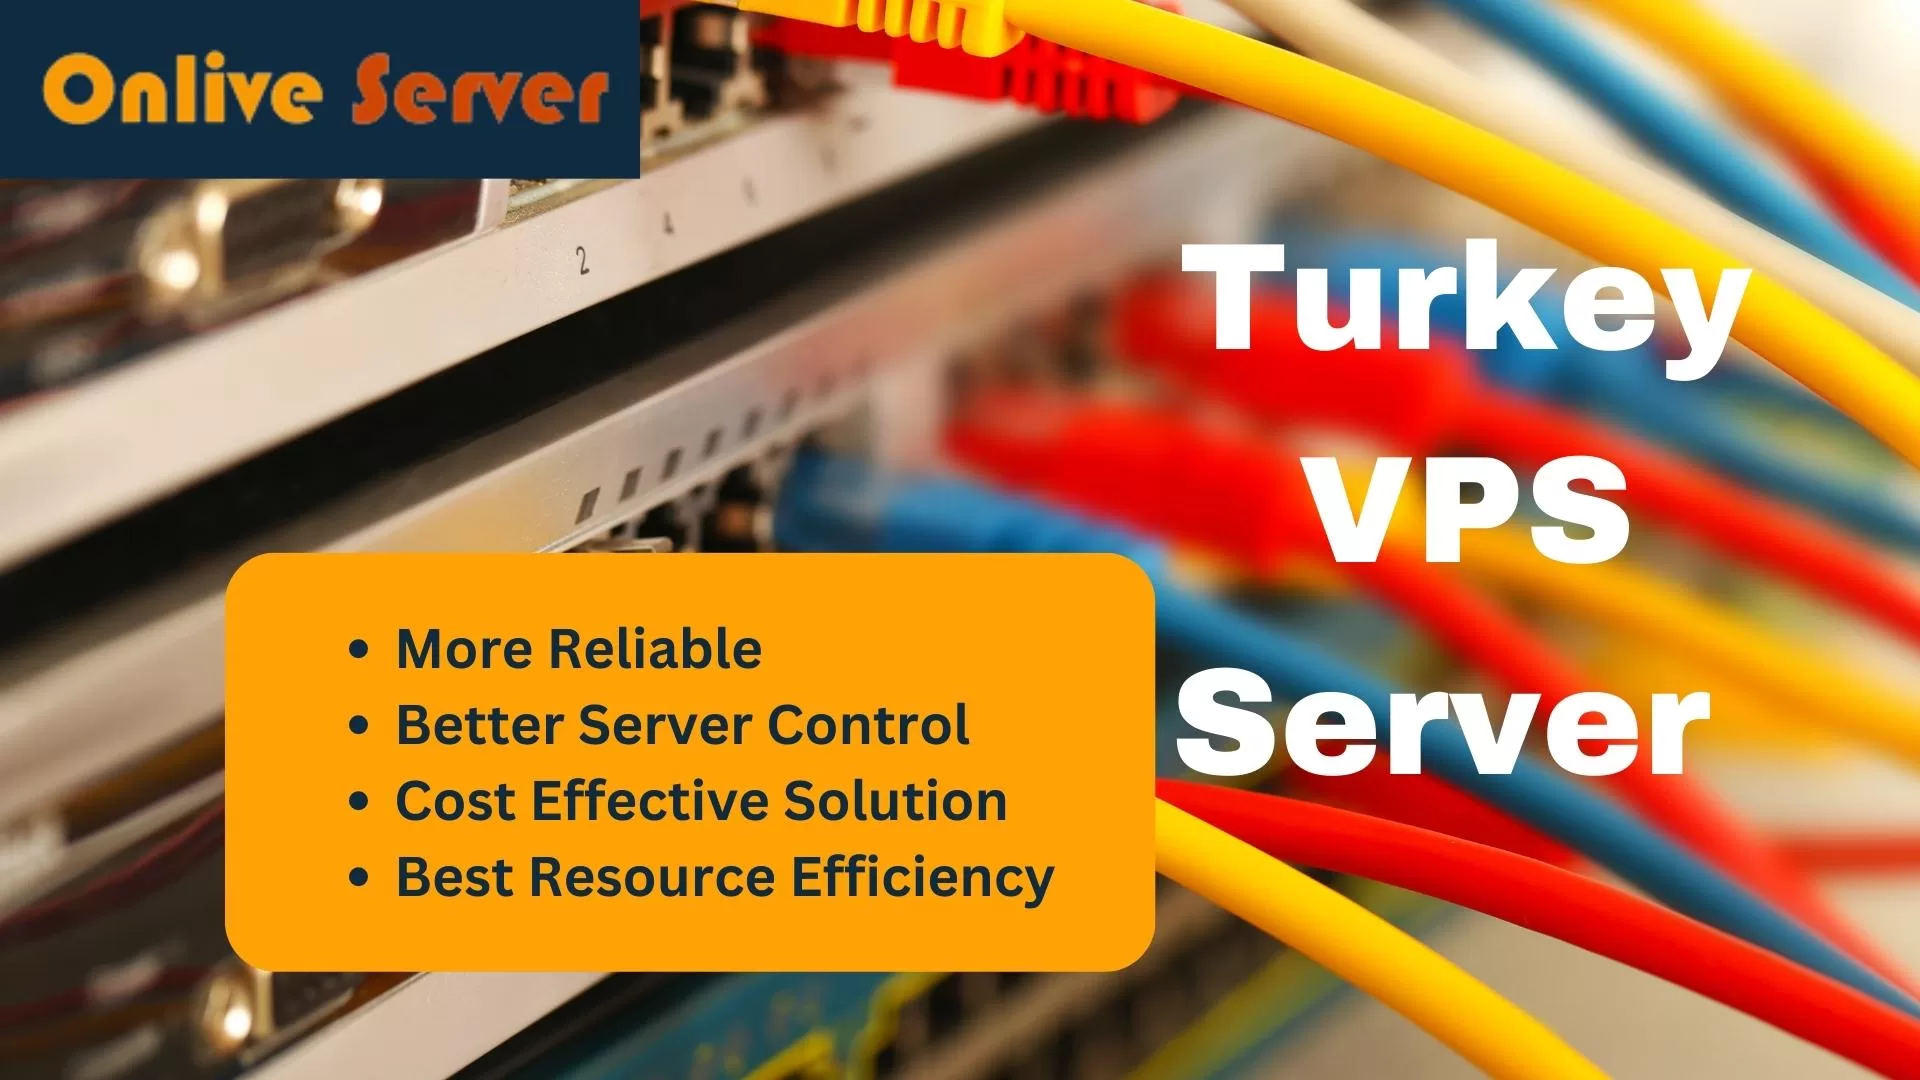 Turkey VPS Server | edtechreader